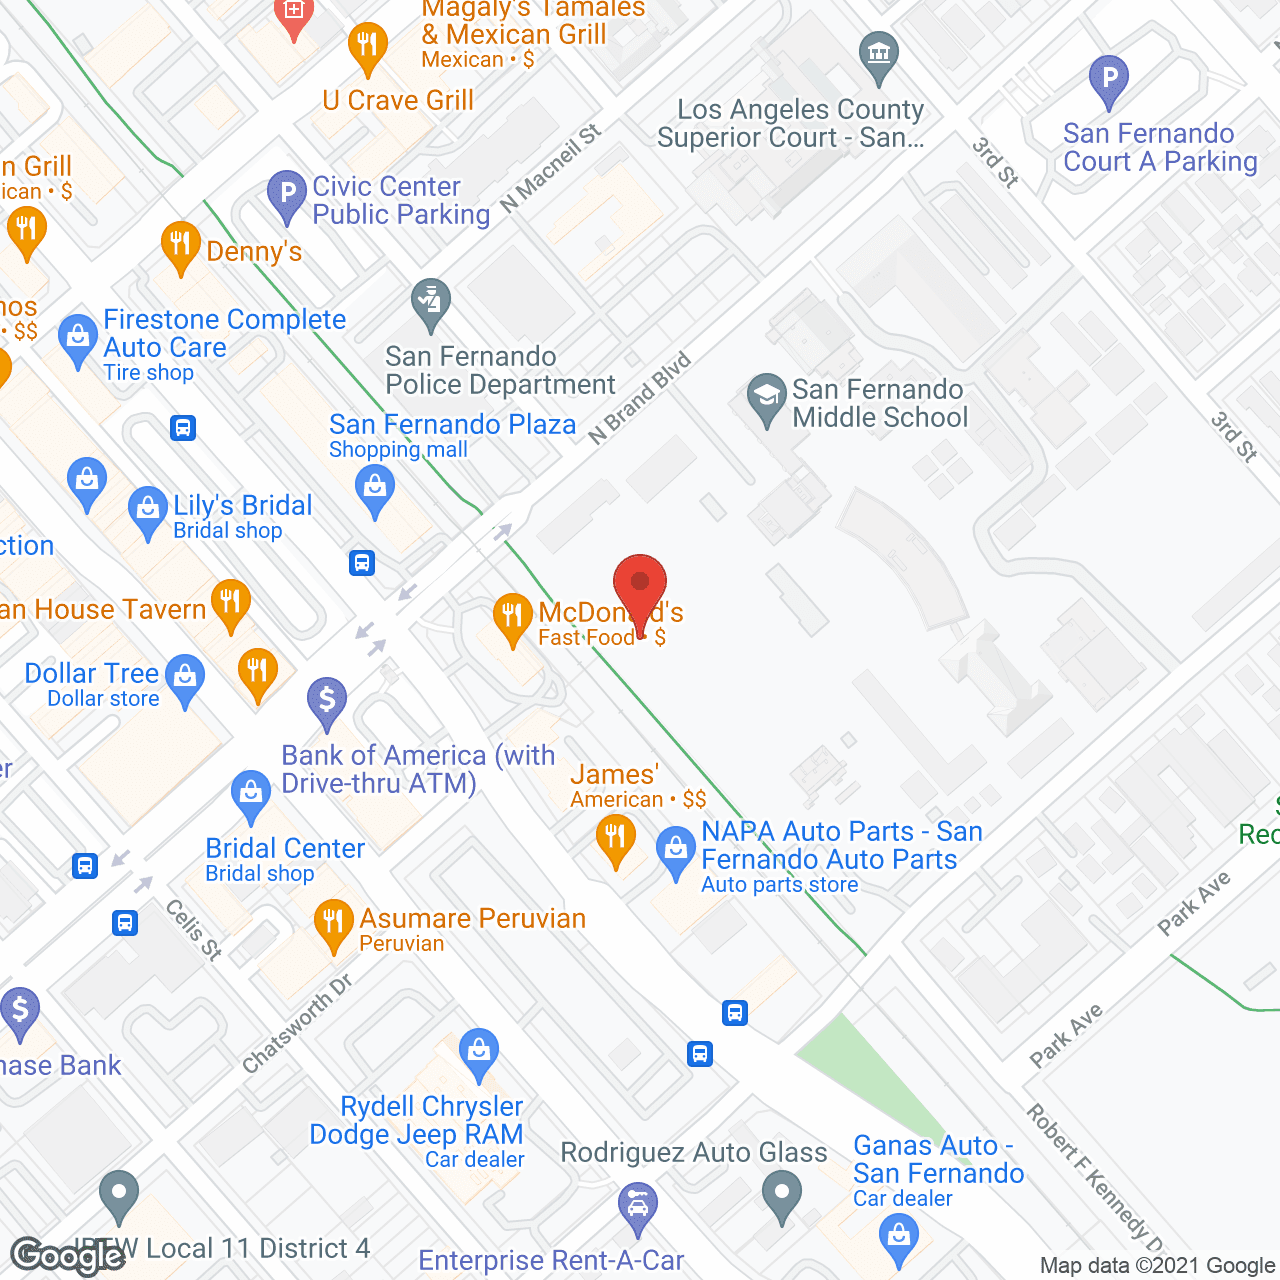 JMS Residential Care in google map